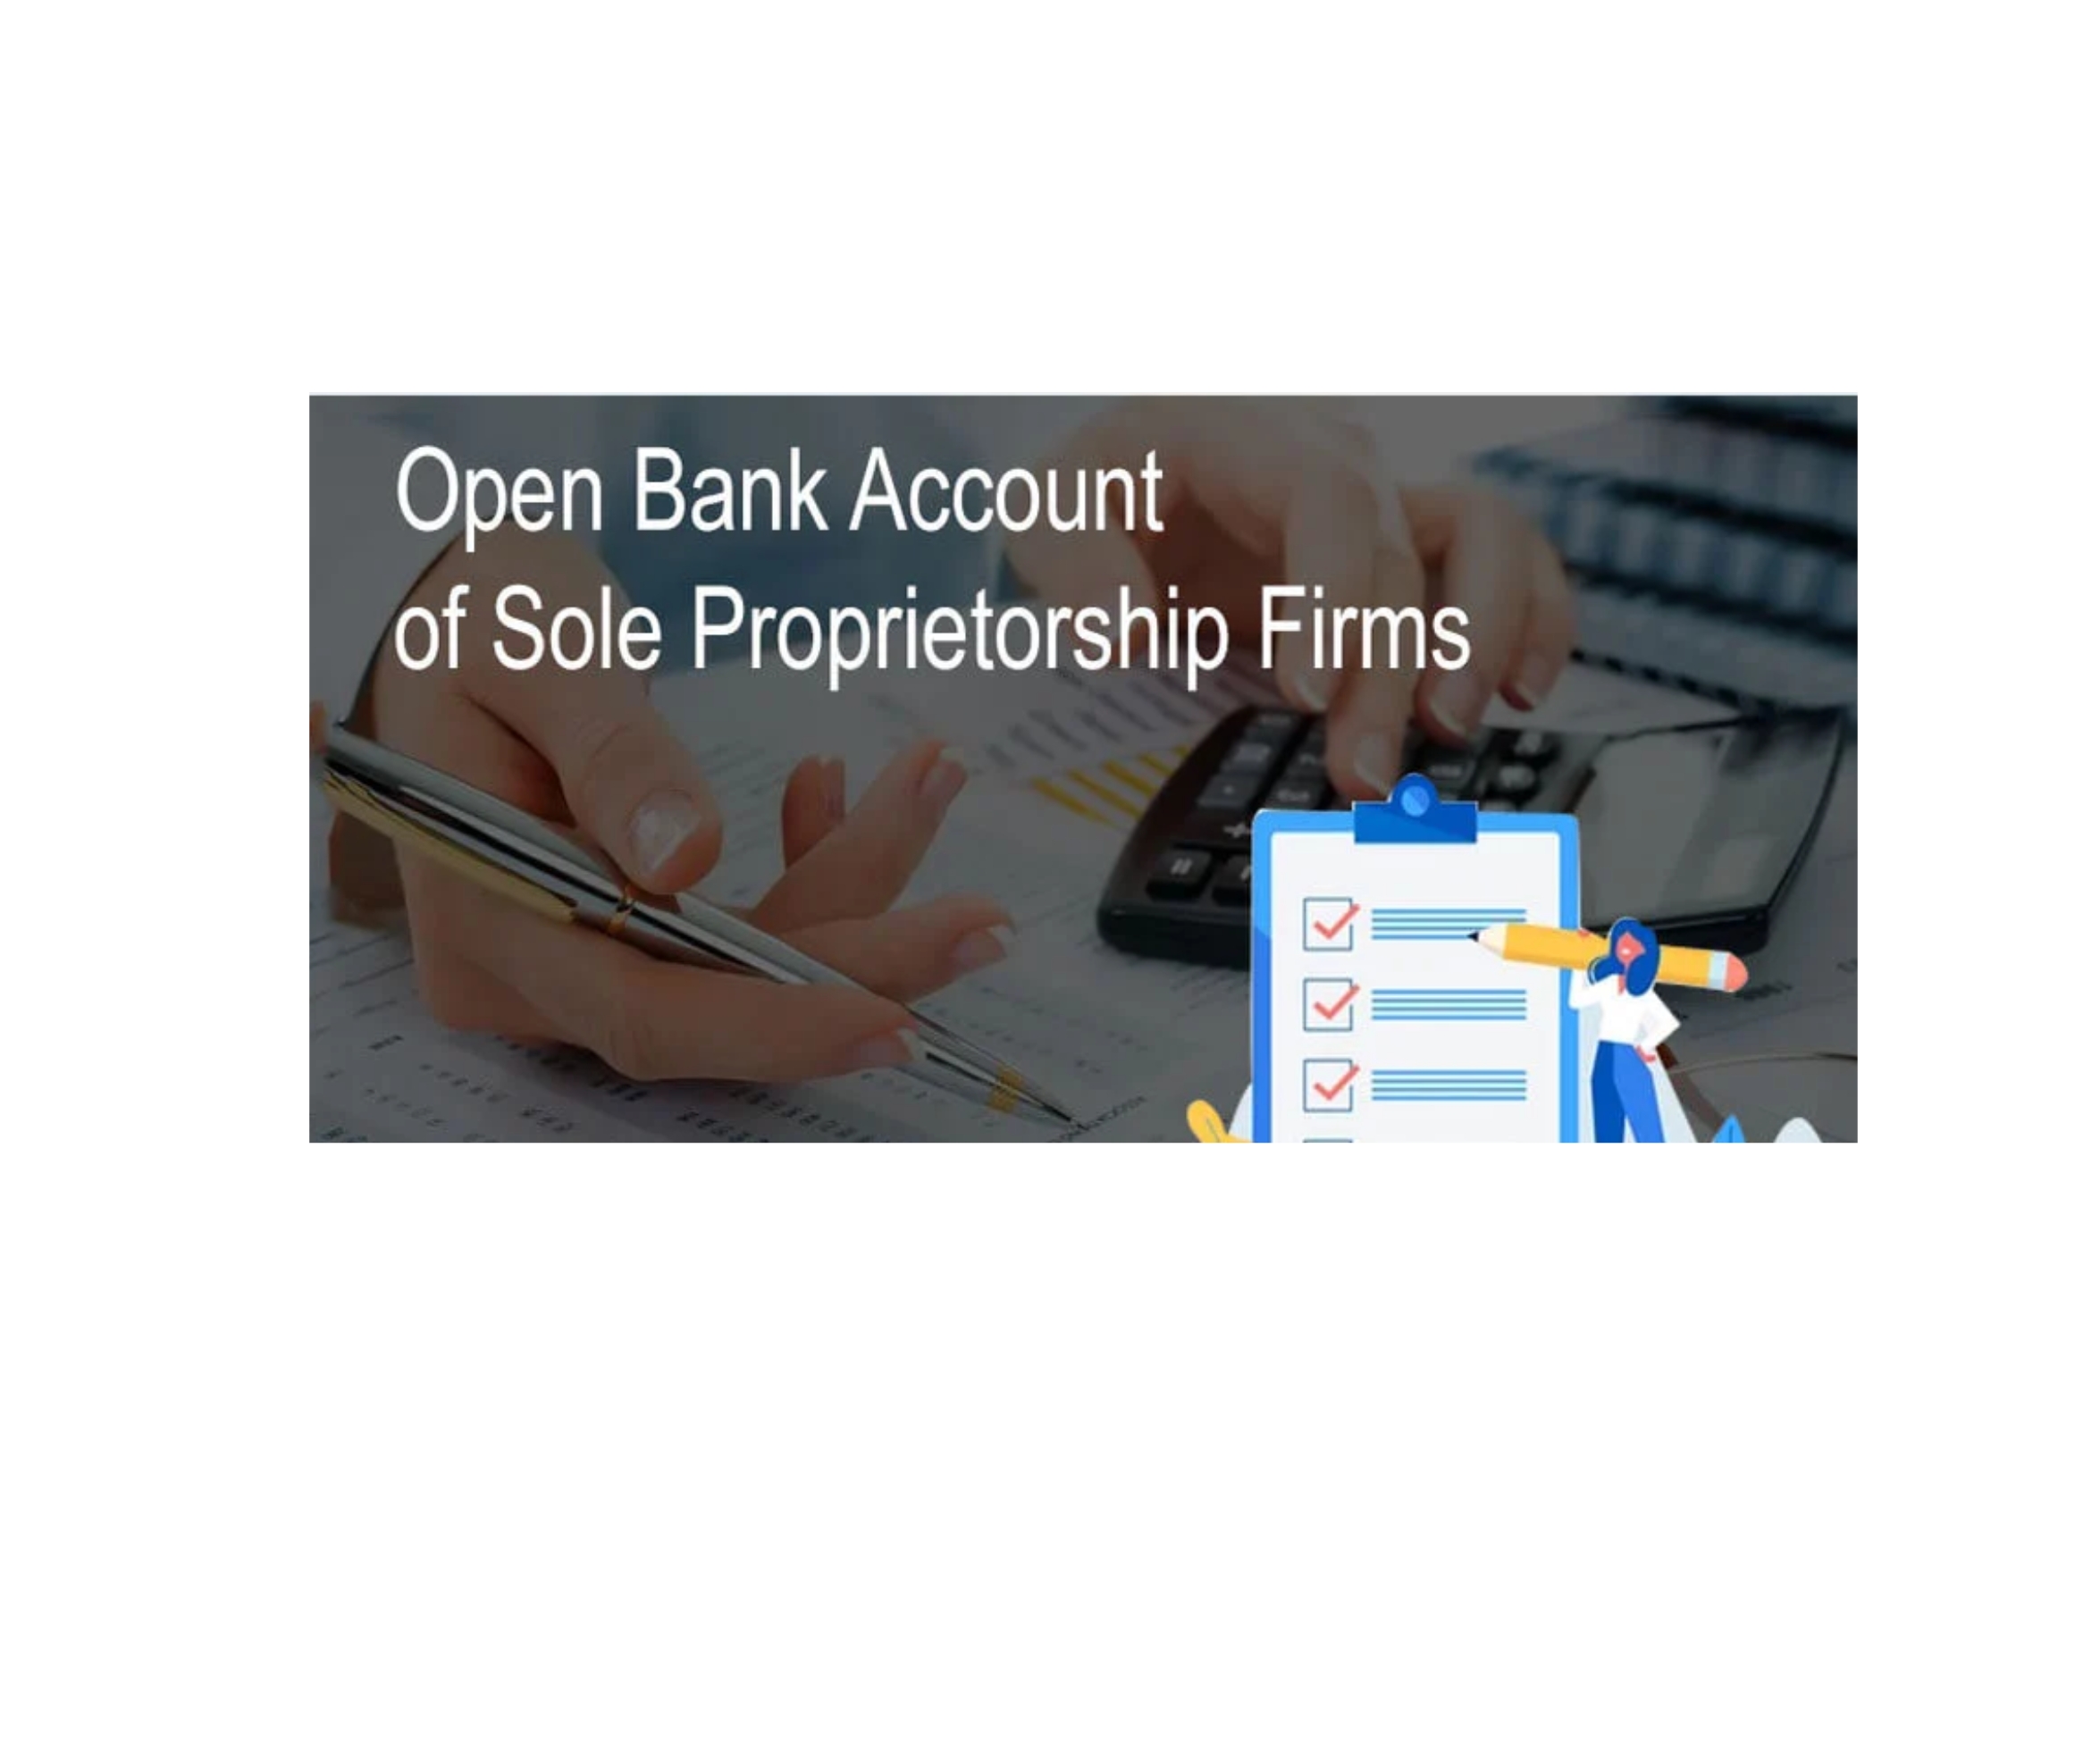 Sole proprietorship account opening